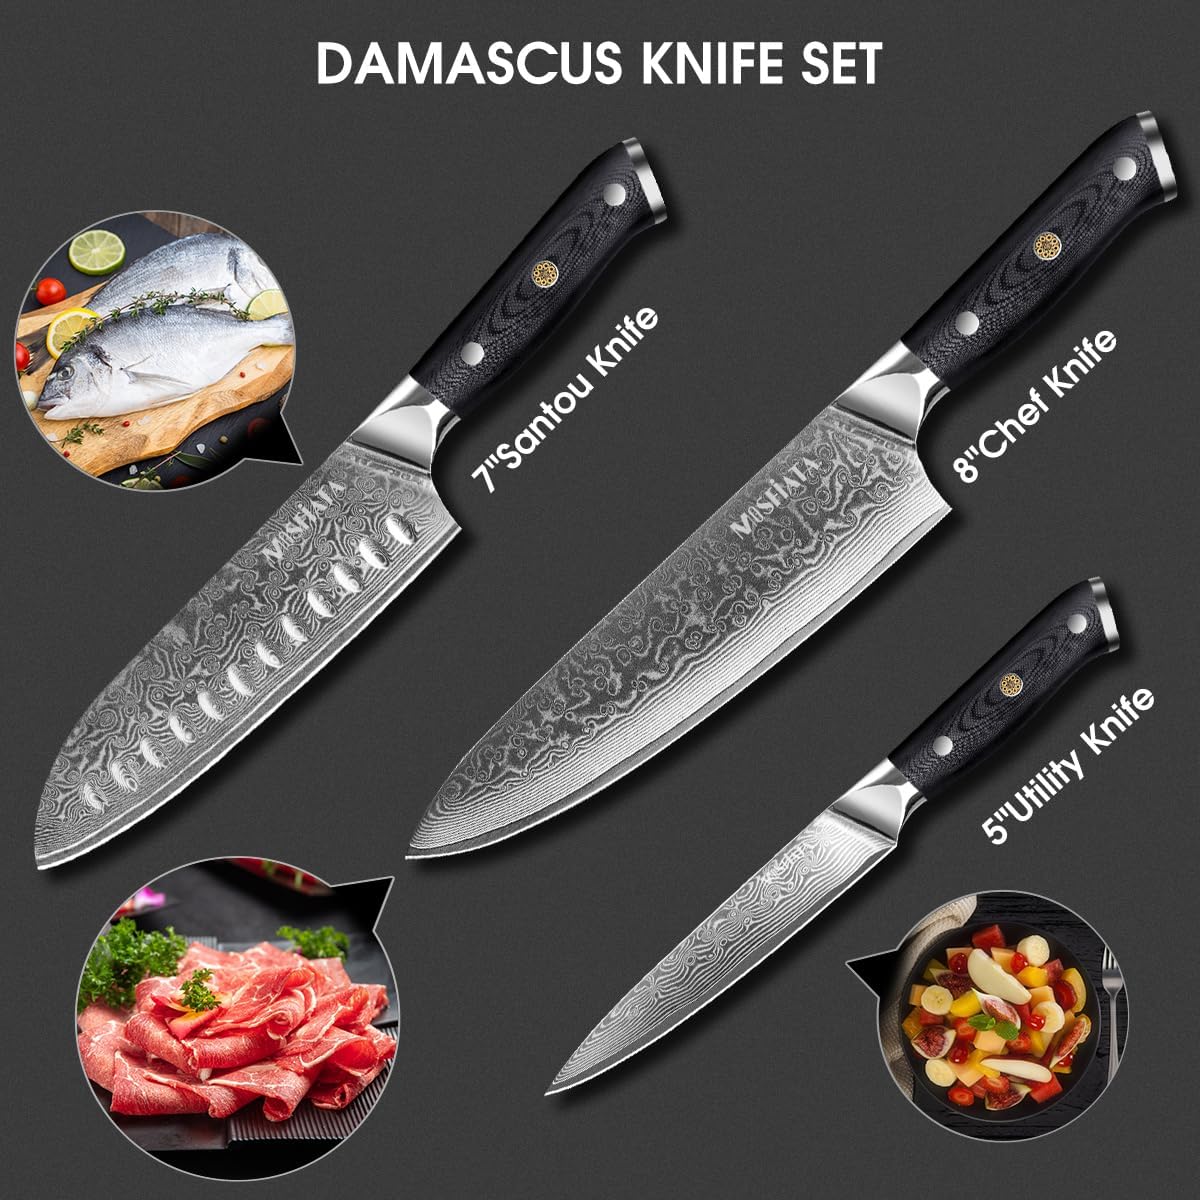  MOSFiATA 8 inch Chef's Knife & 7 inch Santoku Knife